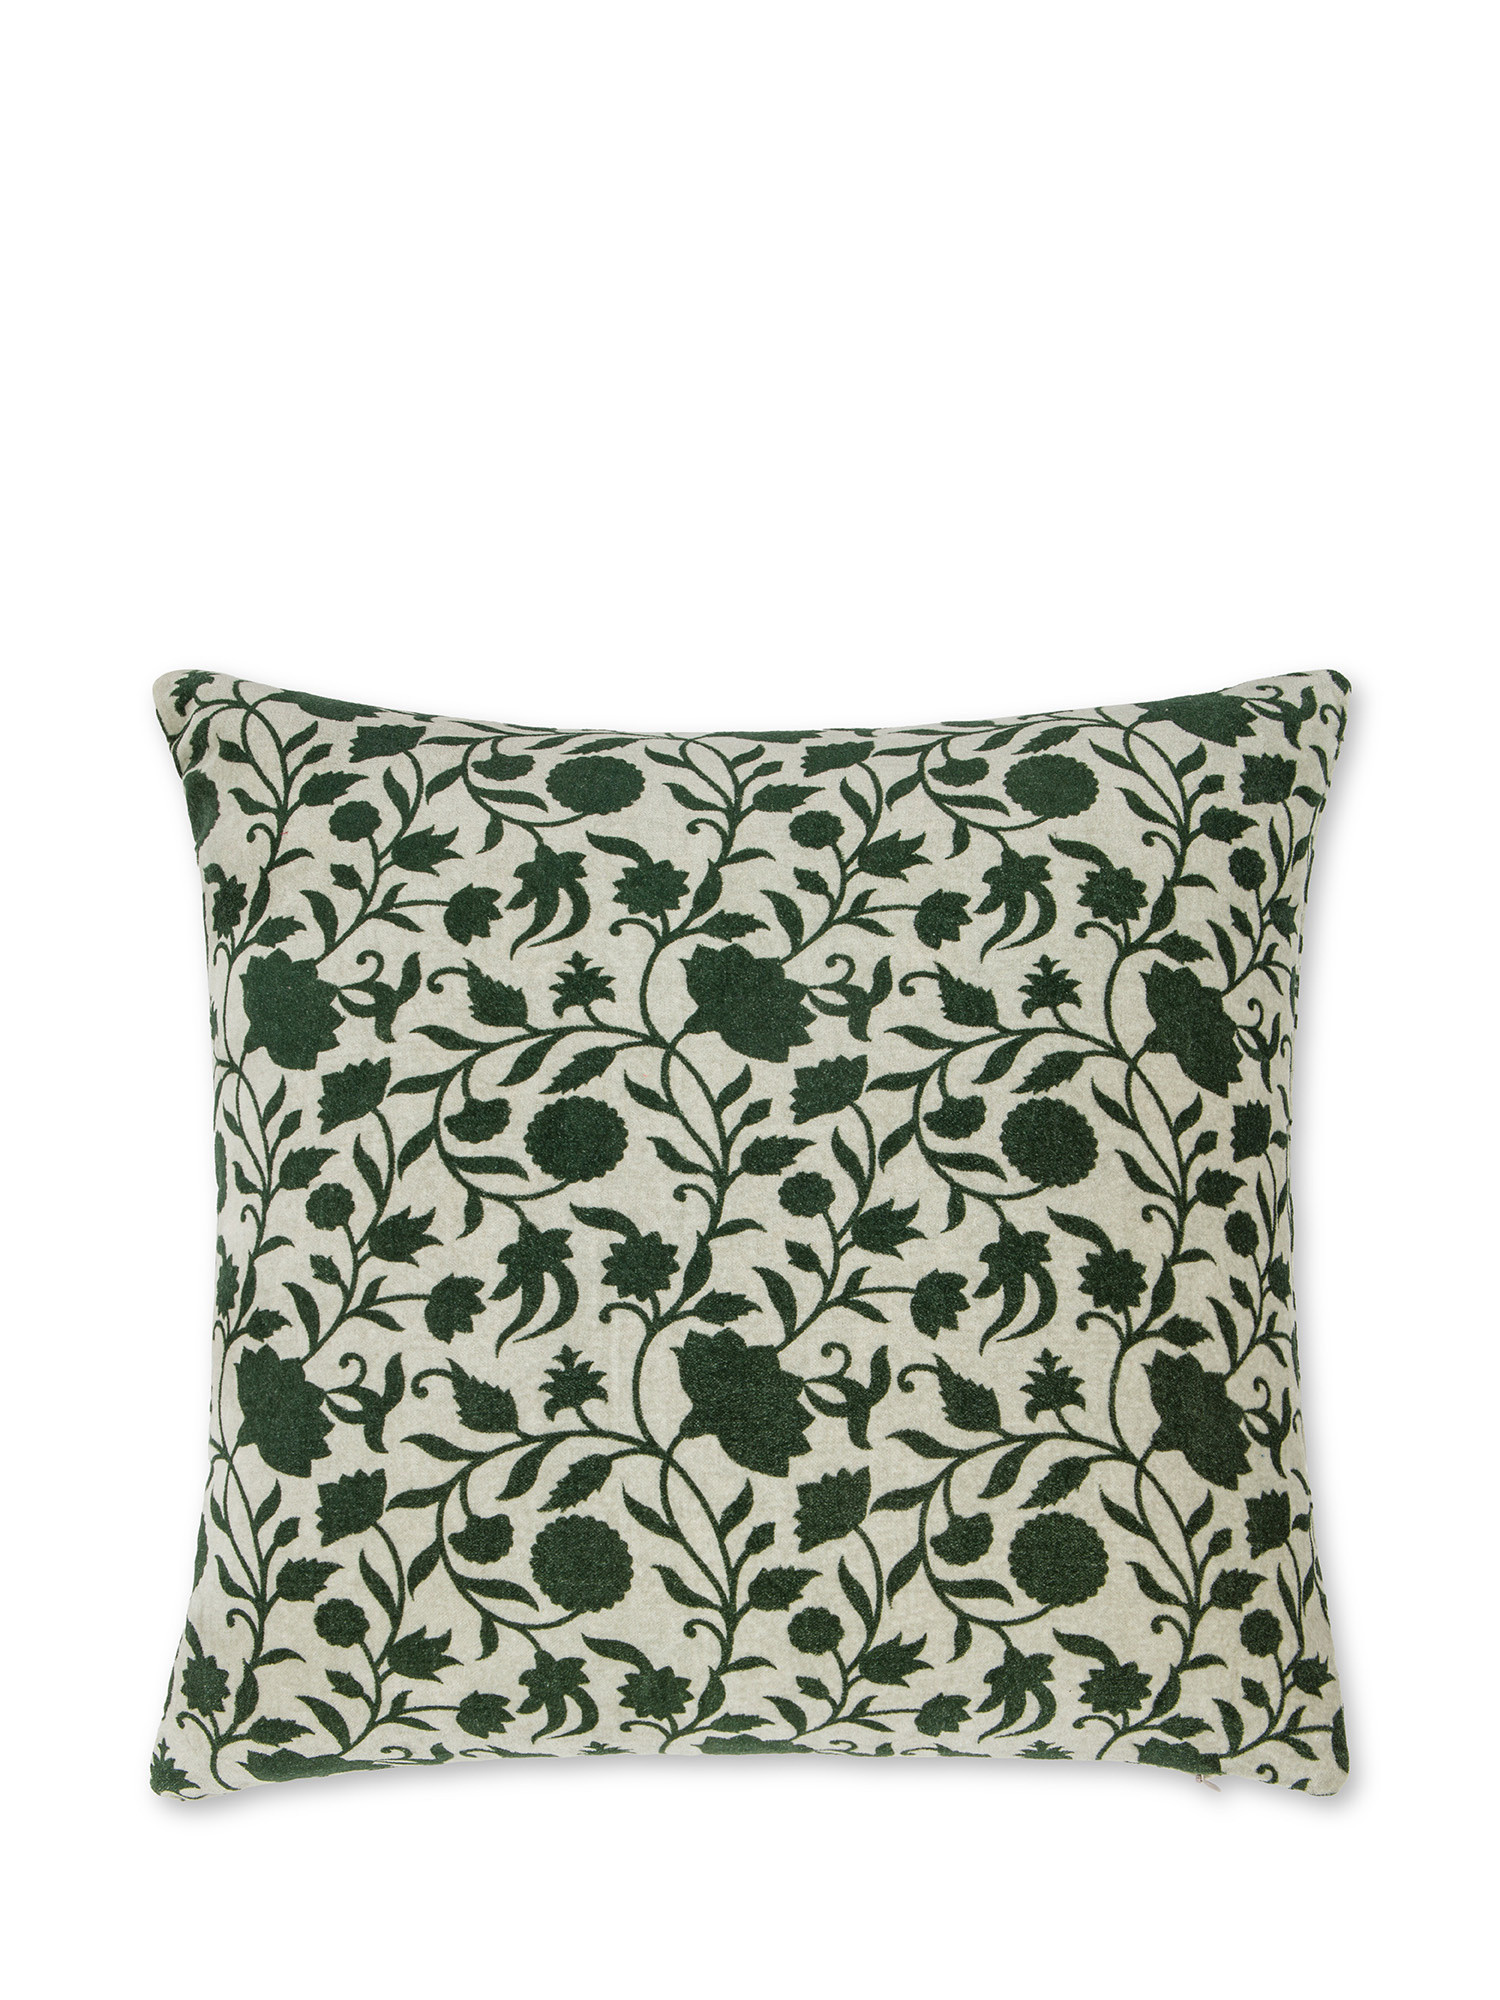 Cuscino velluto stampato motivo fiori 45X45cm, Verde, large image number 1